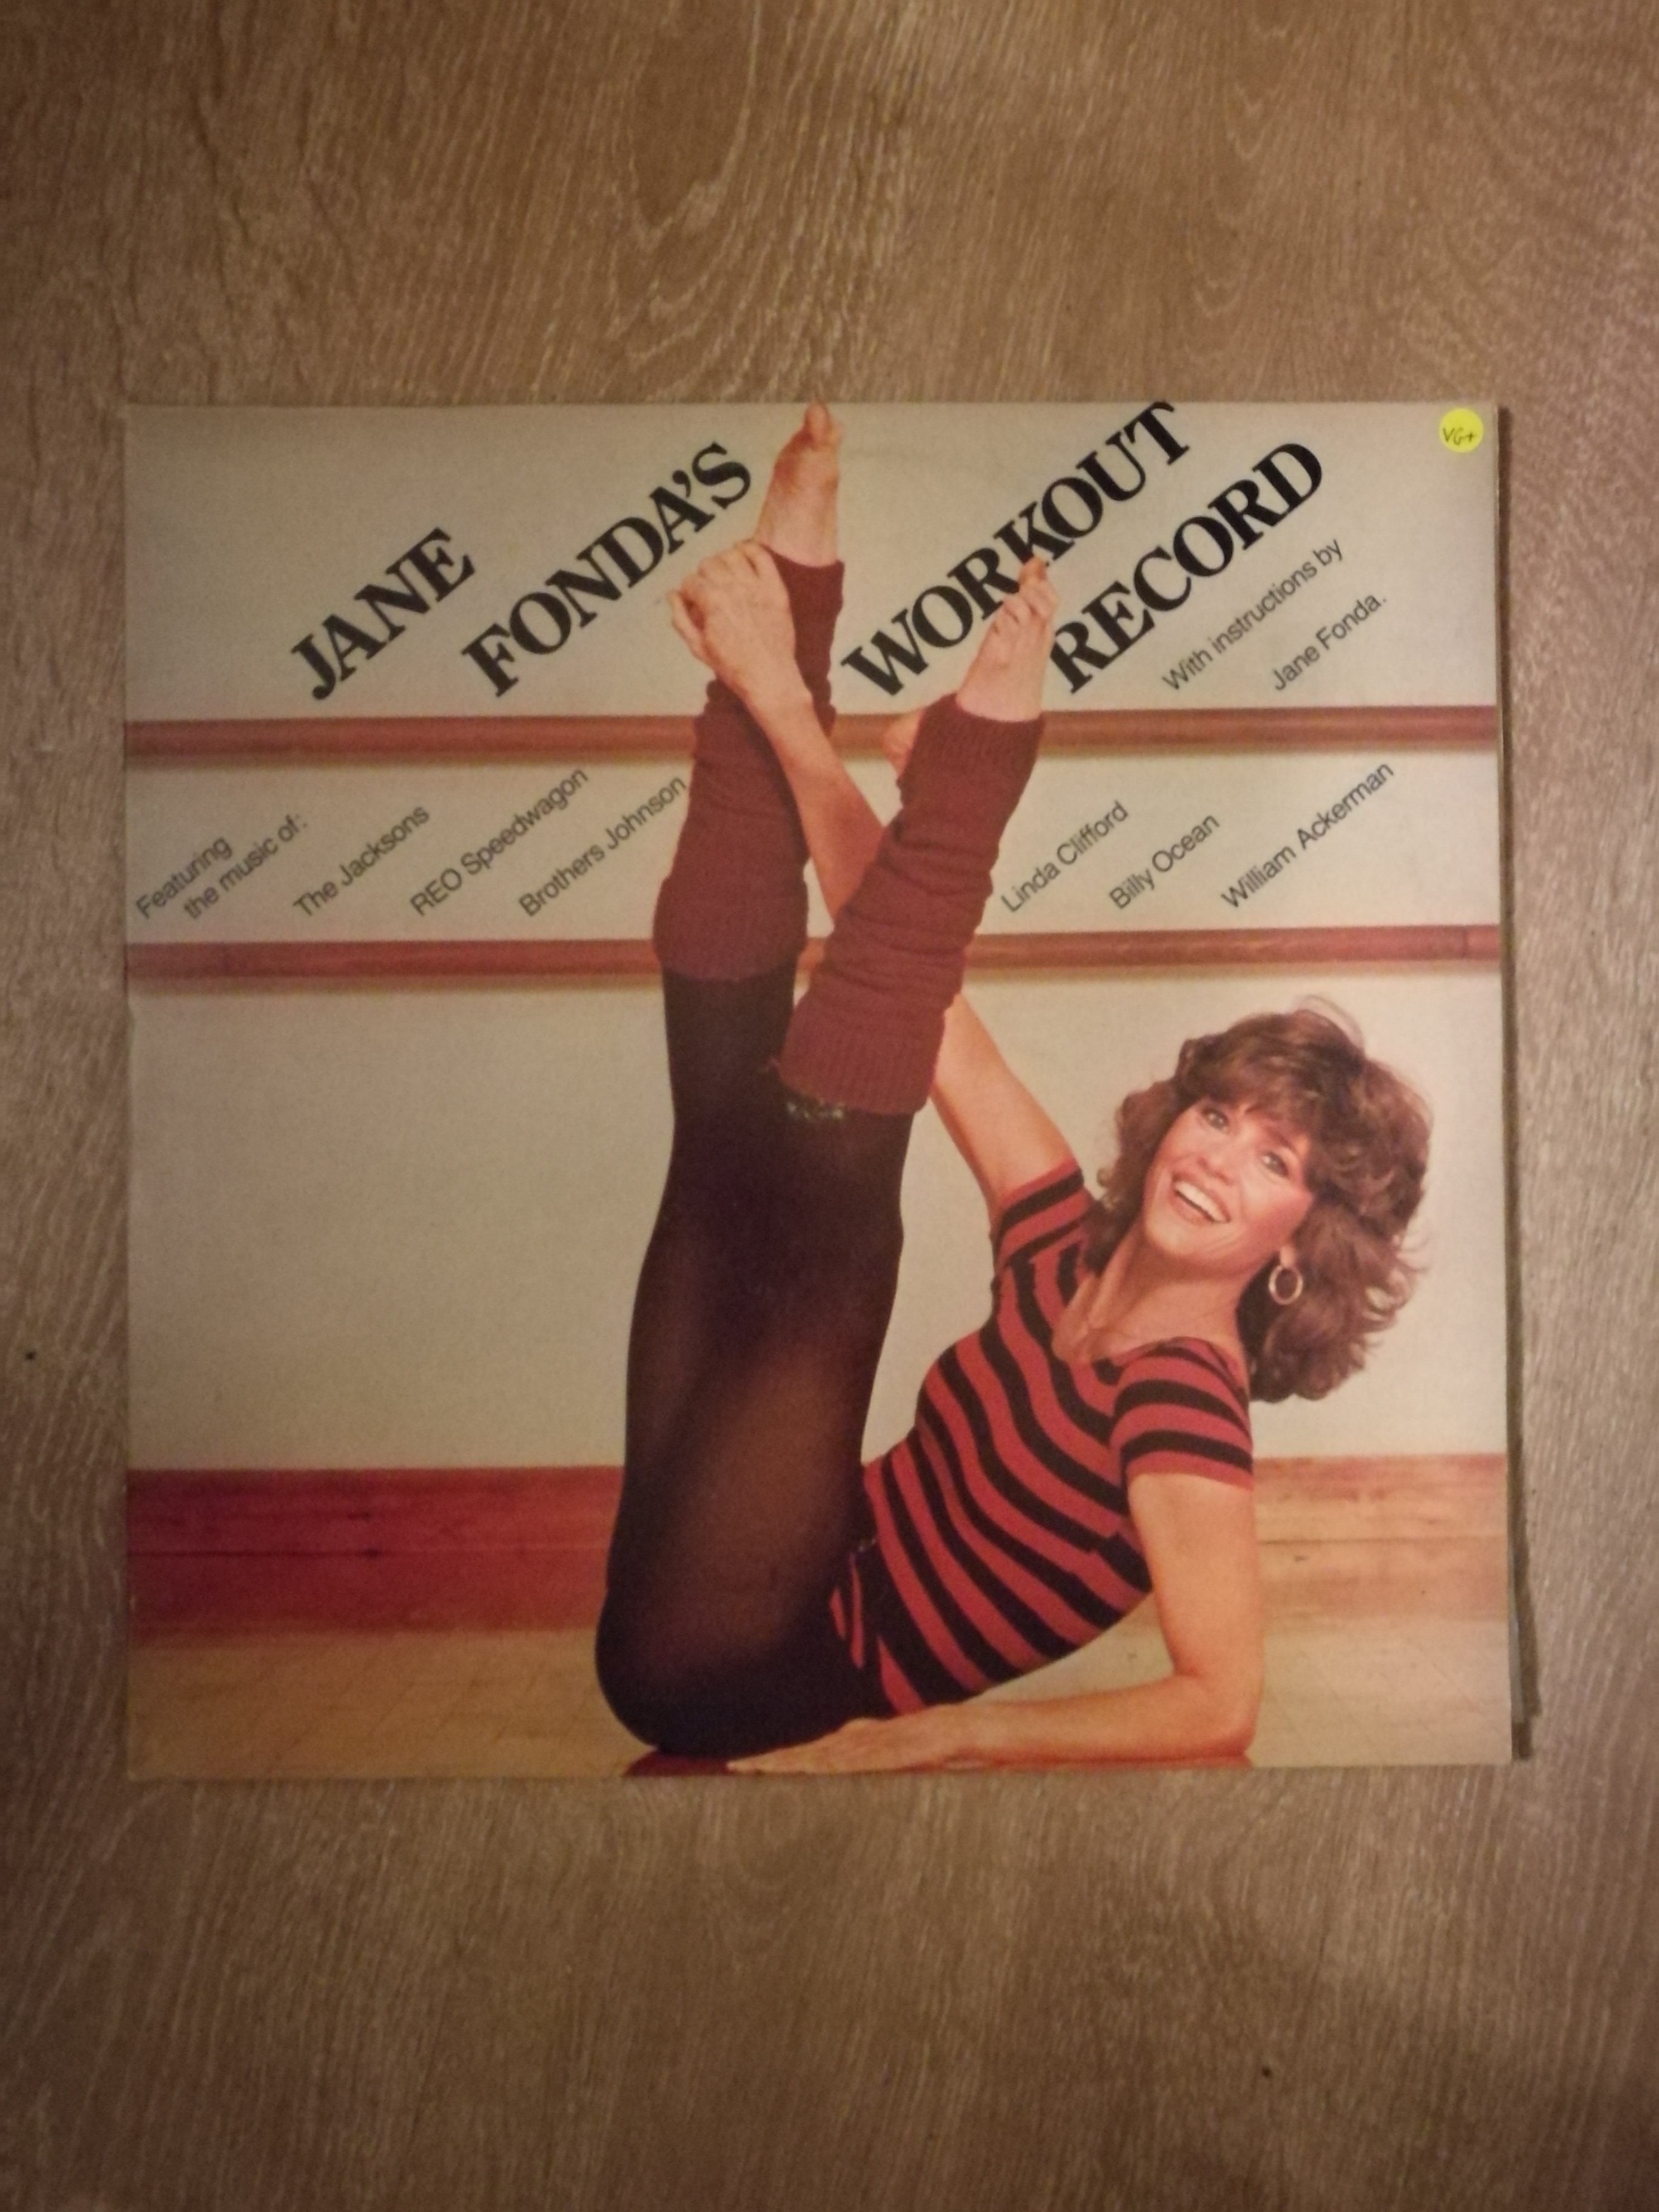 15 Minute Jane Fonda Original Workout Album for Burn Fat fast